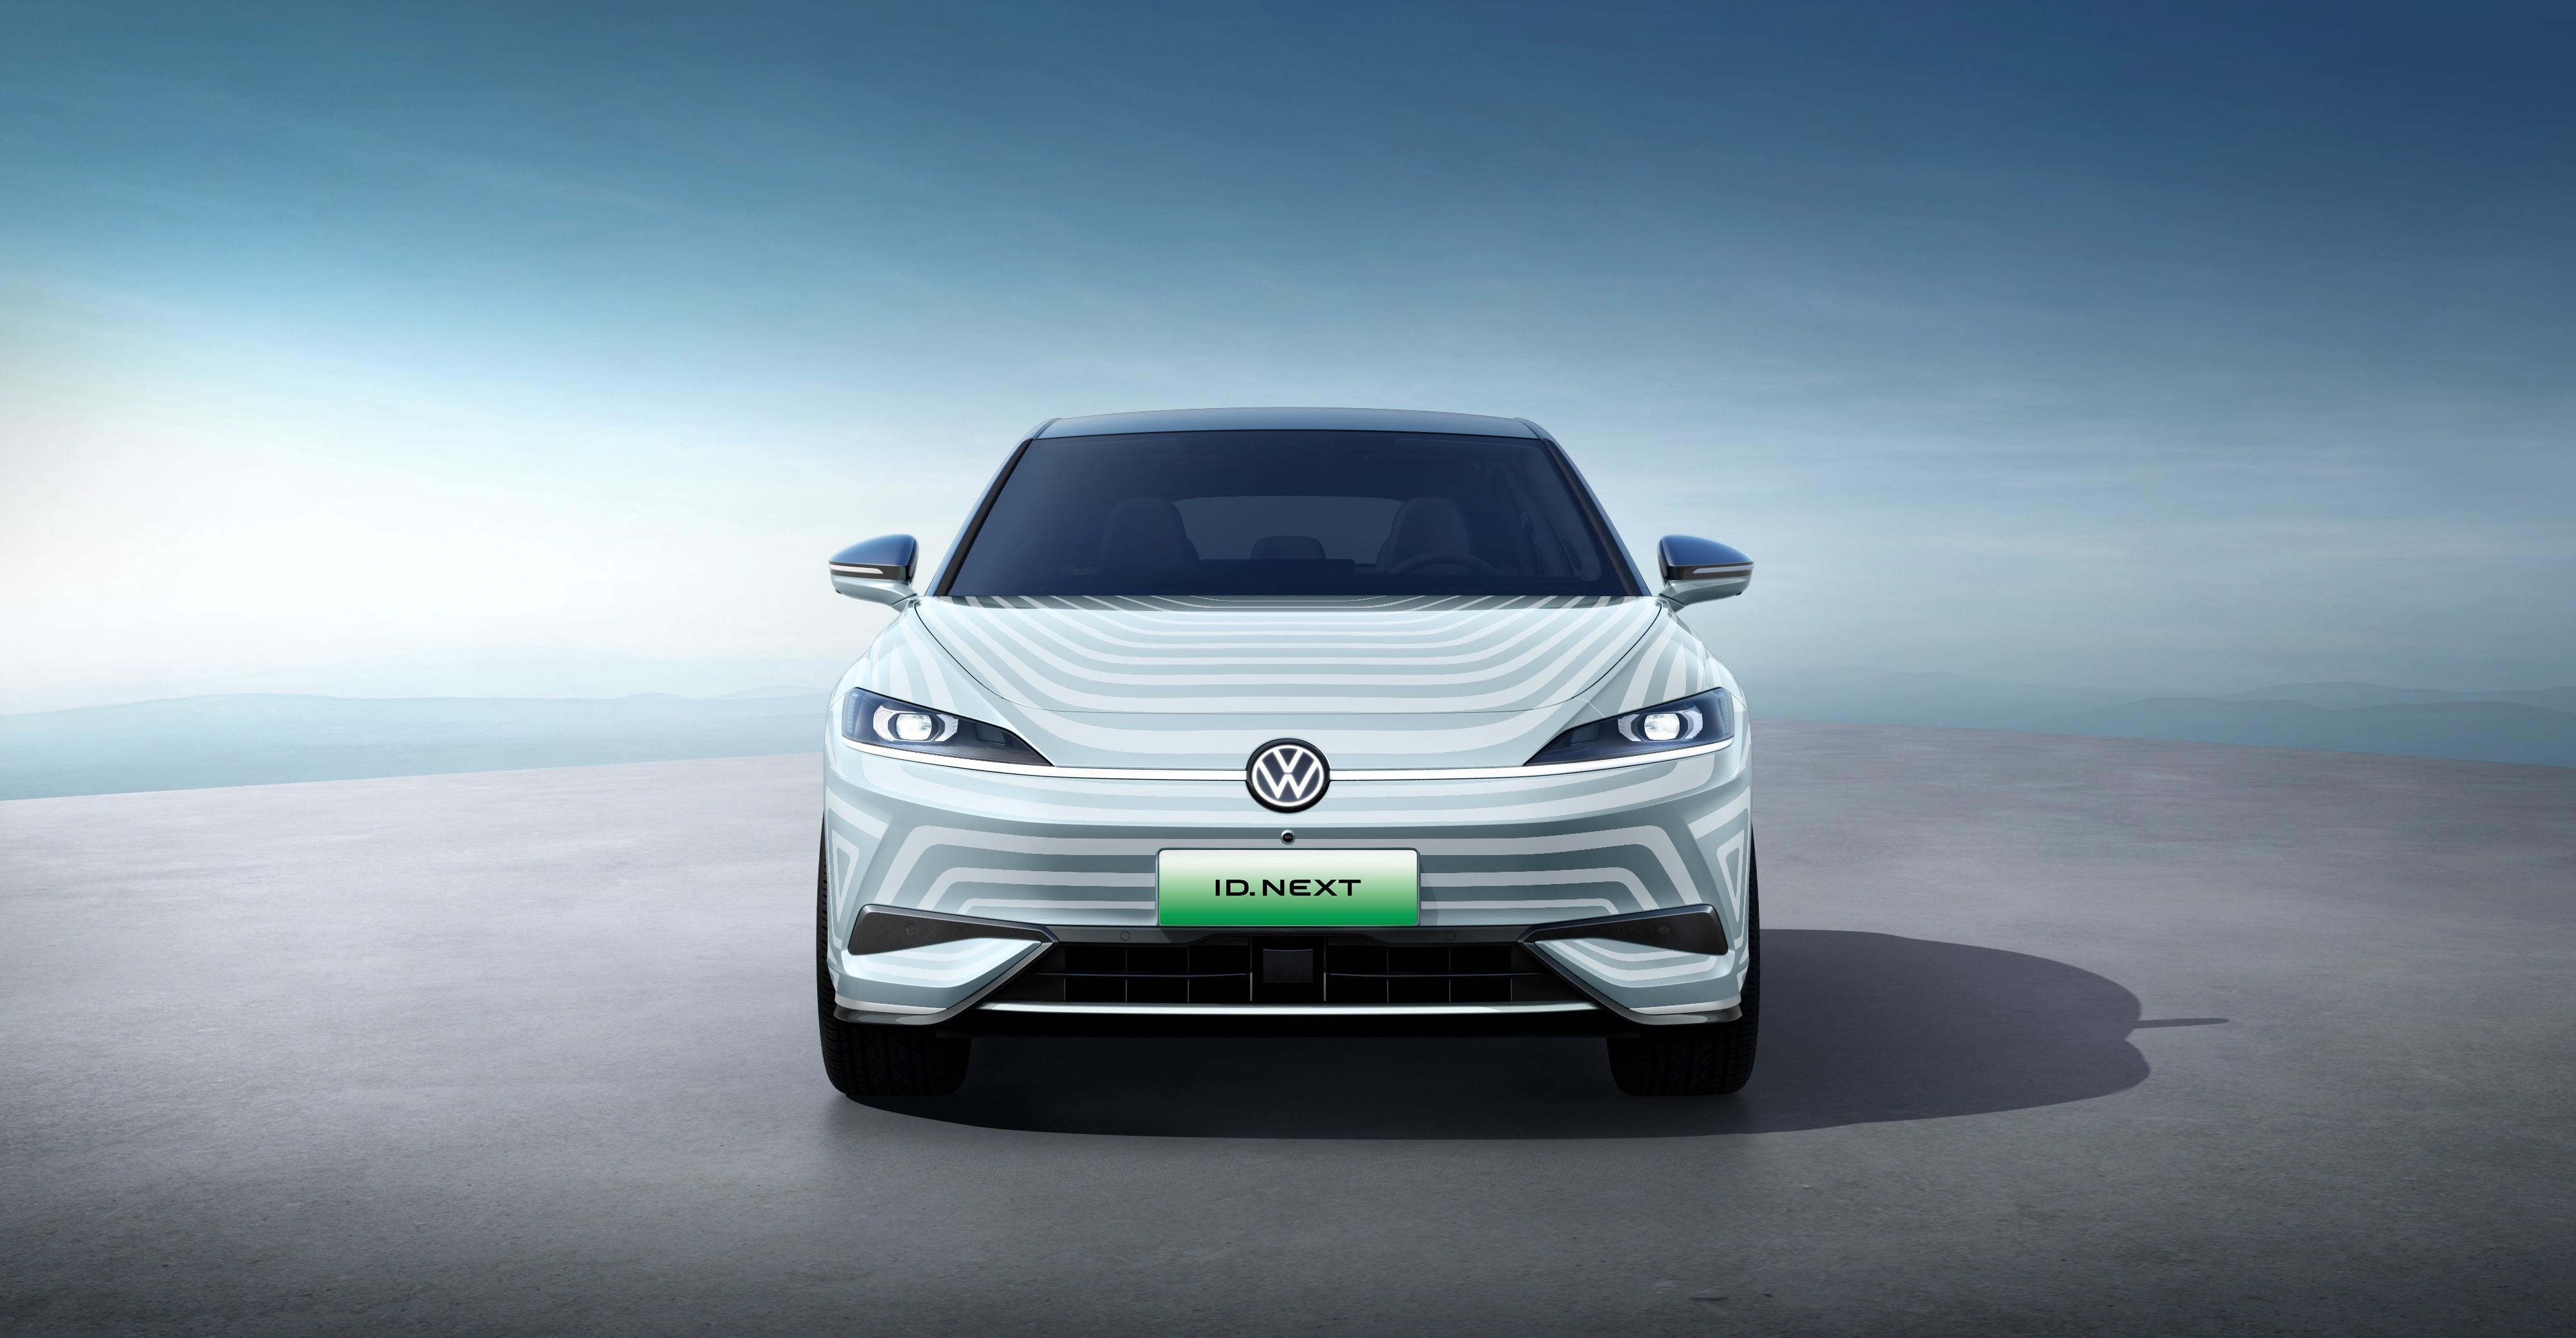 Volkswagen surprisingly unveiled ID.Next concept sedan at Shanghai Auto Show